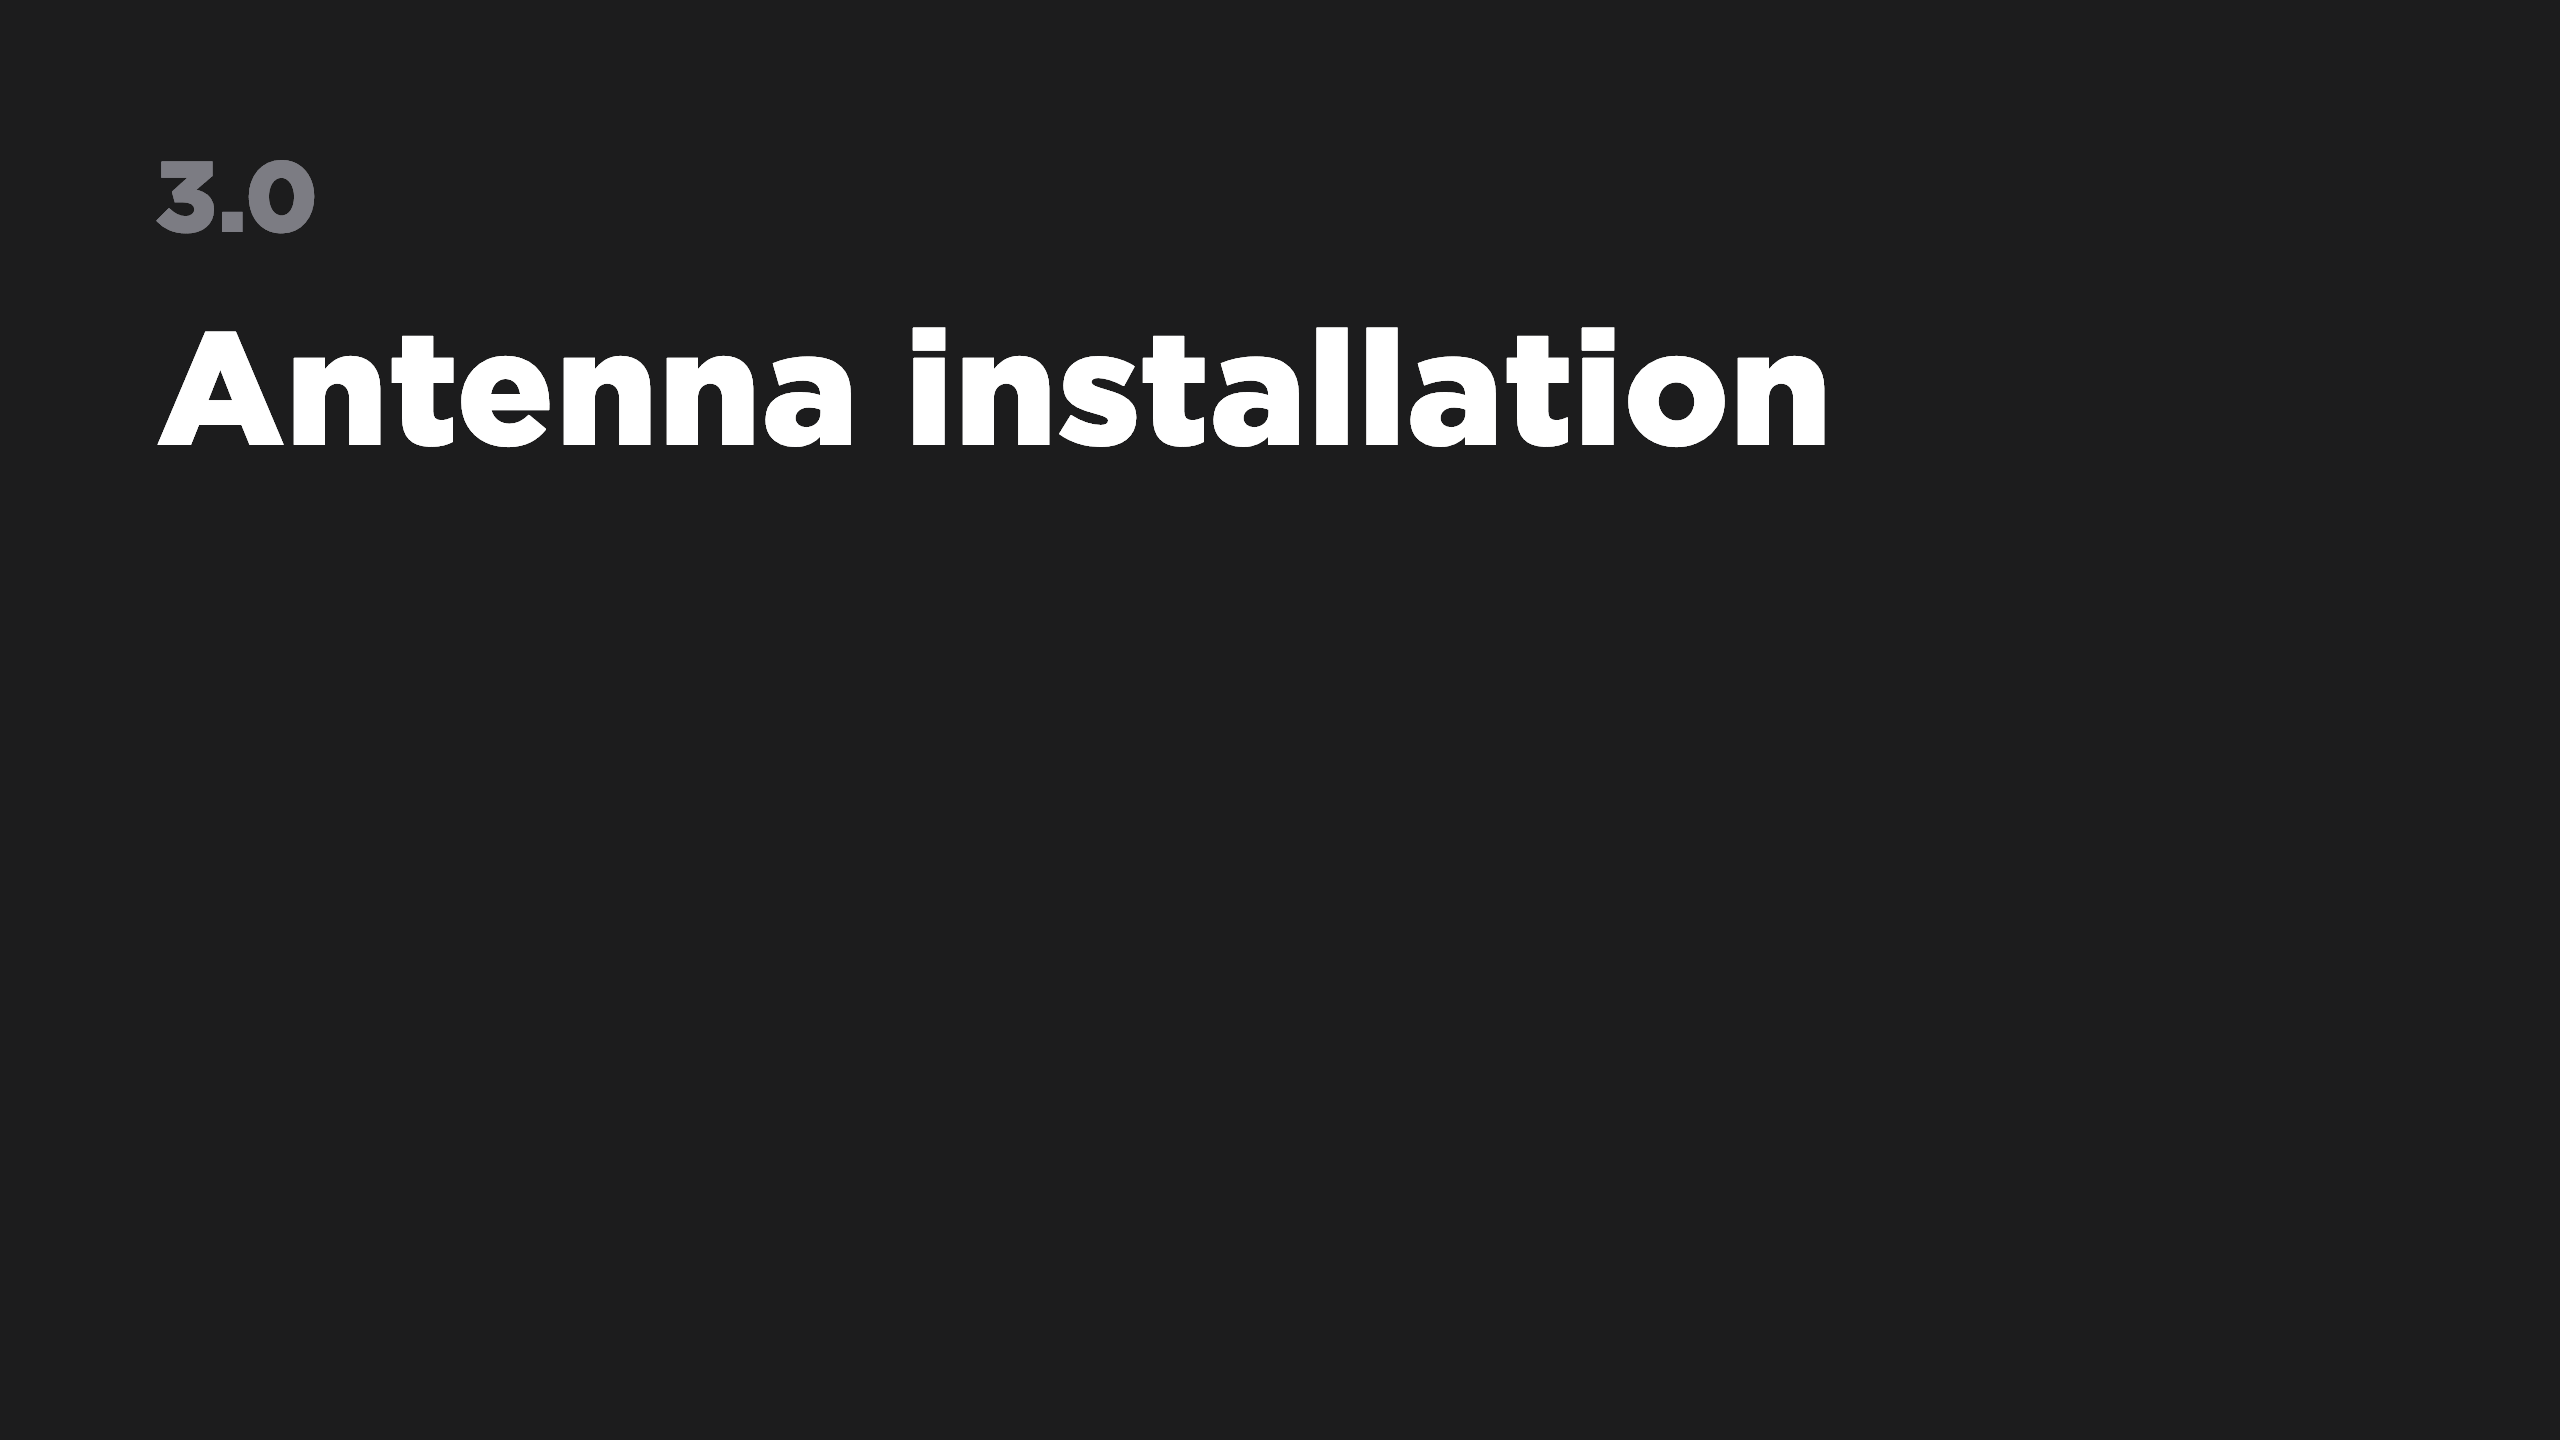 3.0 Antenna installation